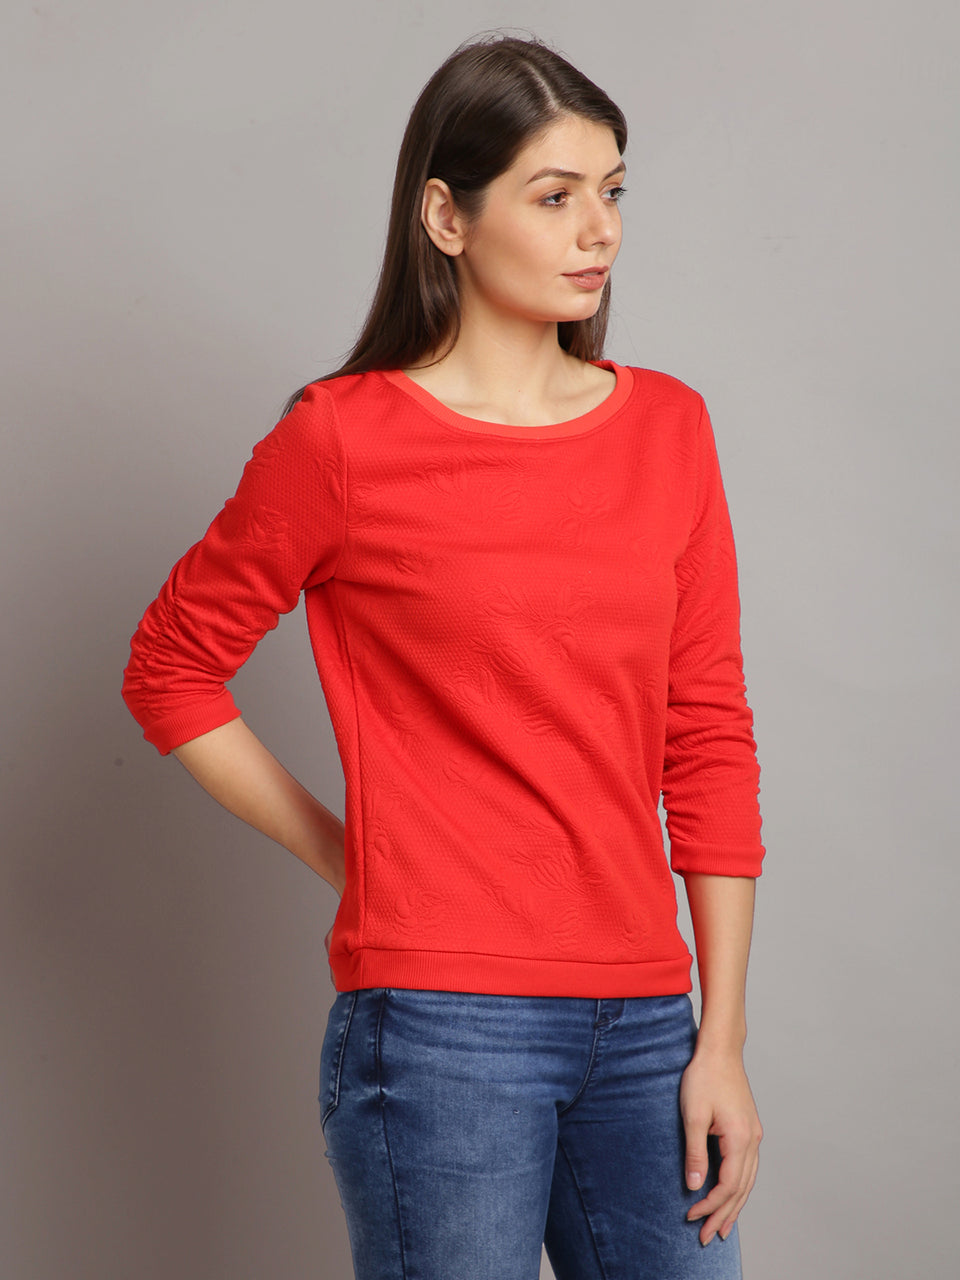 women solid red self design  pullover sweatshirt